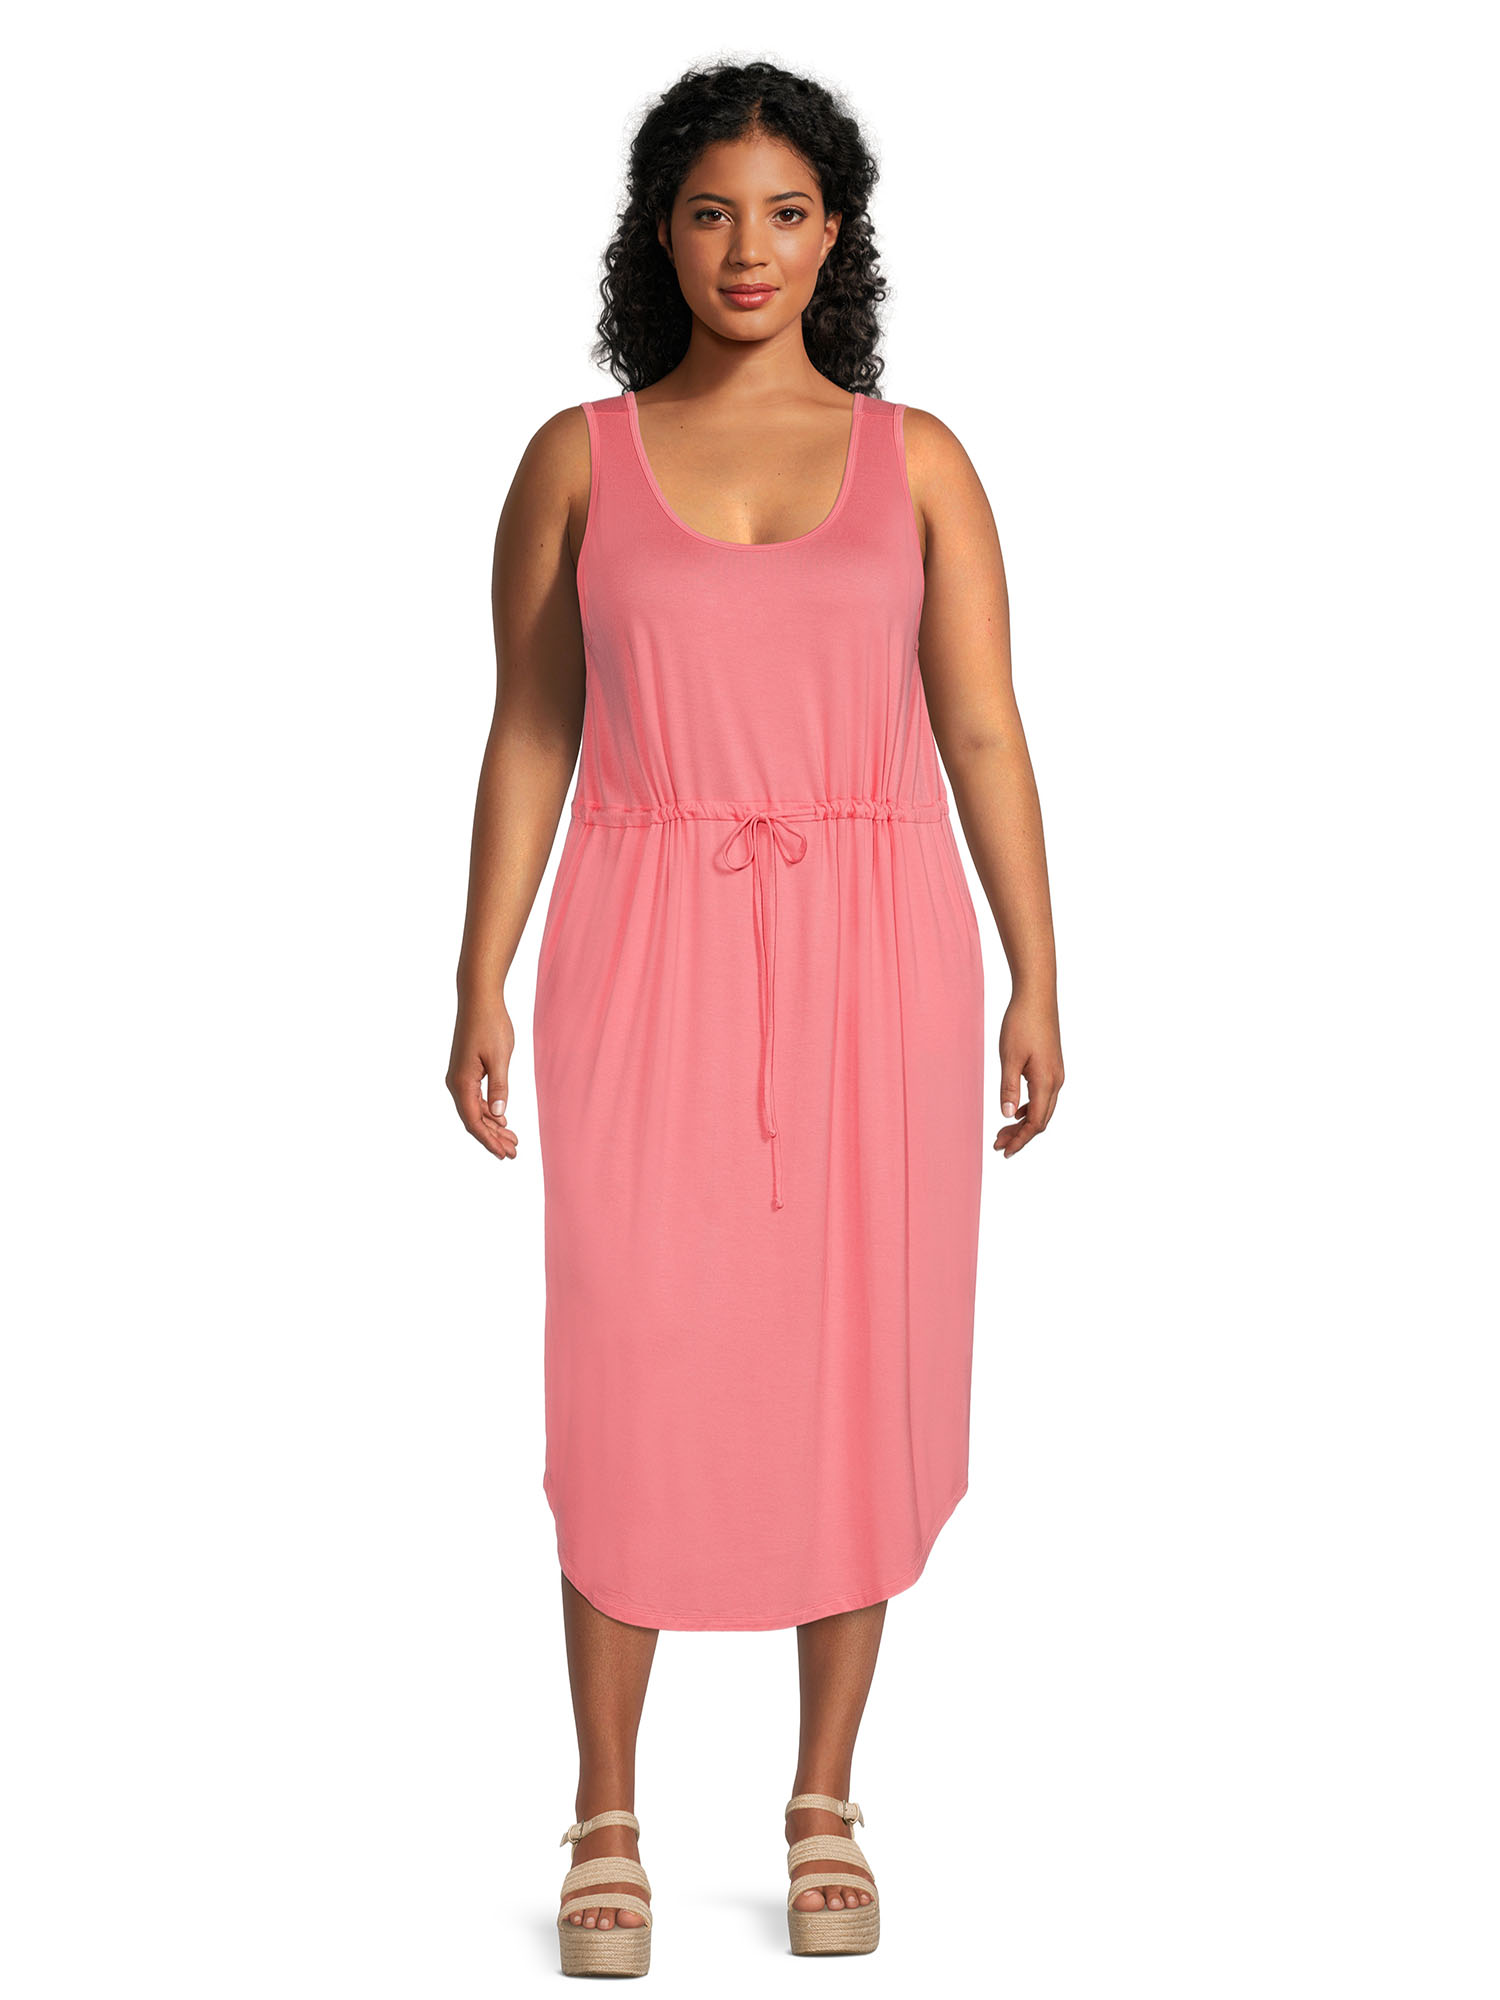 Terra & Sky Women's Plus Size Drawstring Waist Tank Dress - image 1 of 5